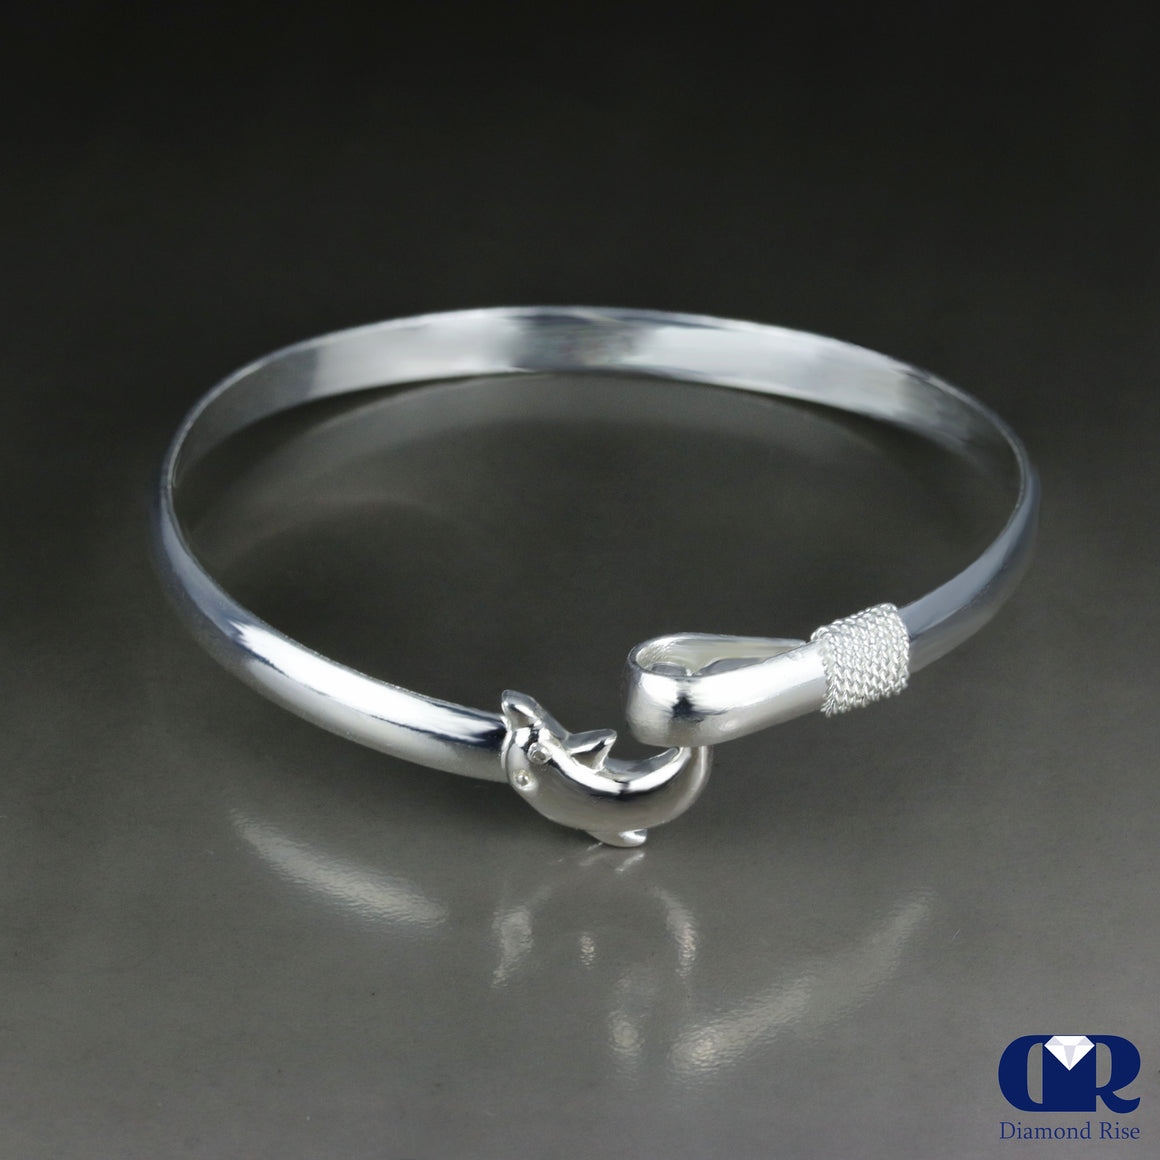 Solid 10K Gold Adjustable Dolphin Design Bangle Bracelet - Diamond Rise Jewelry